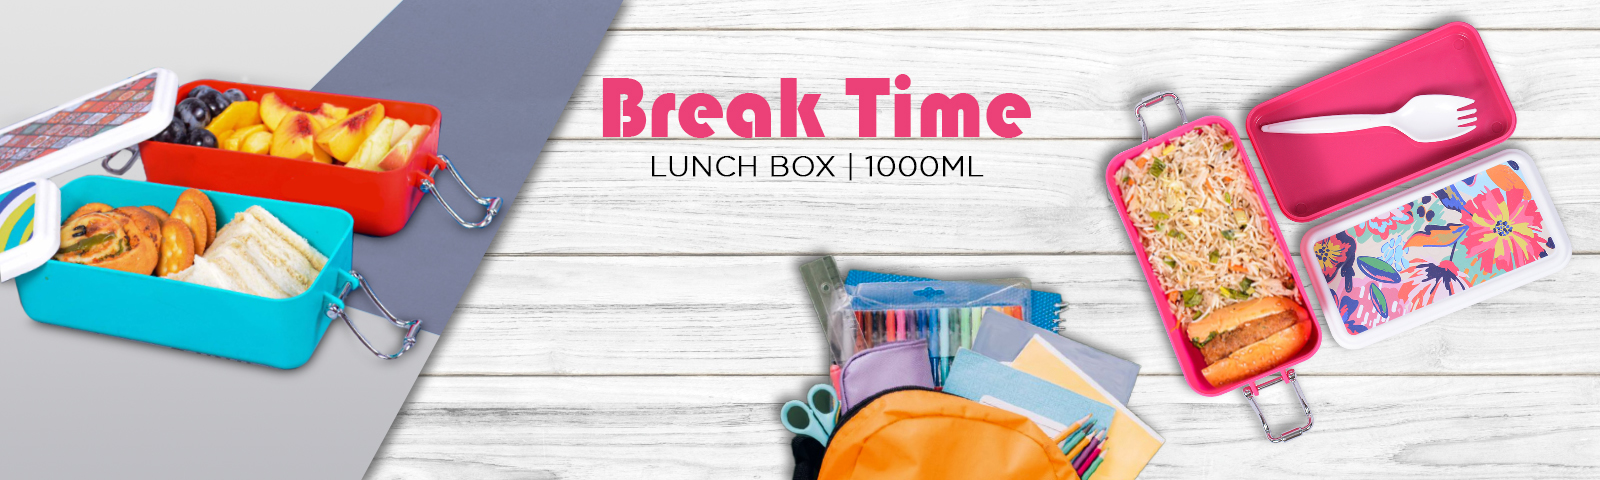 maxware household break time lunchbox